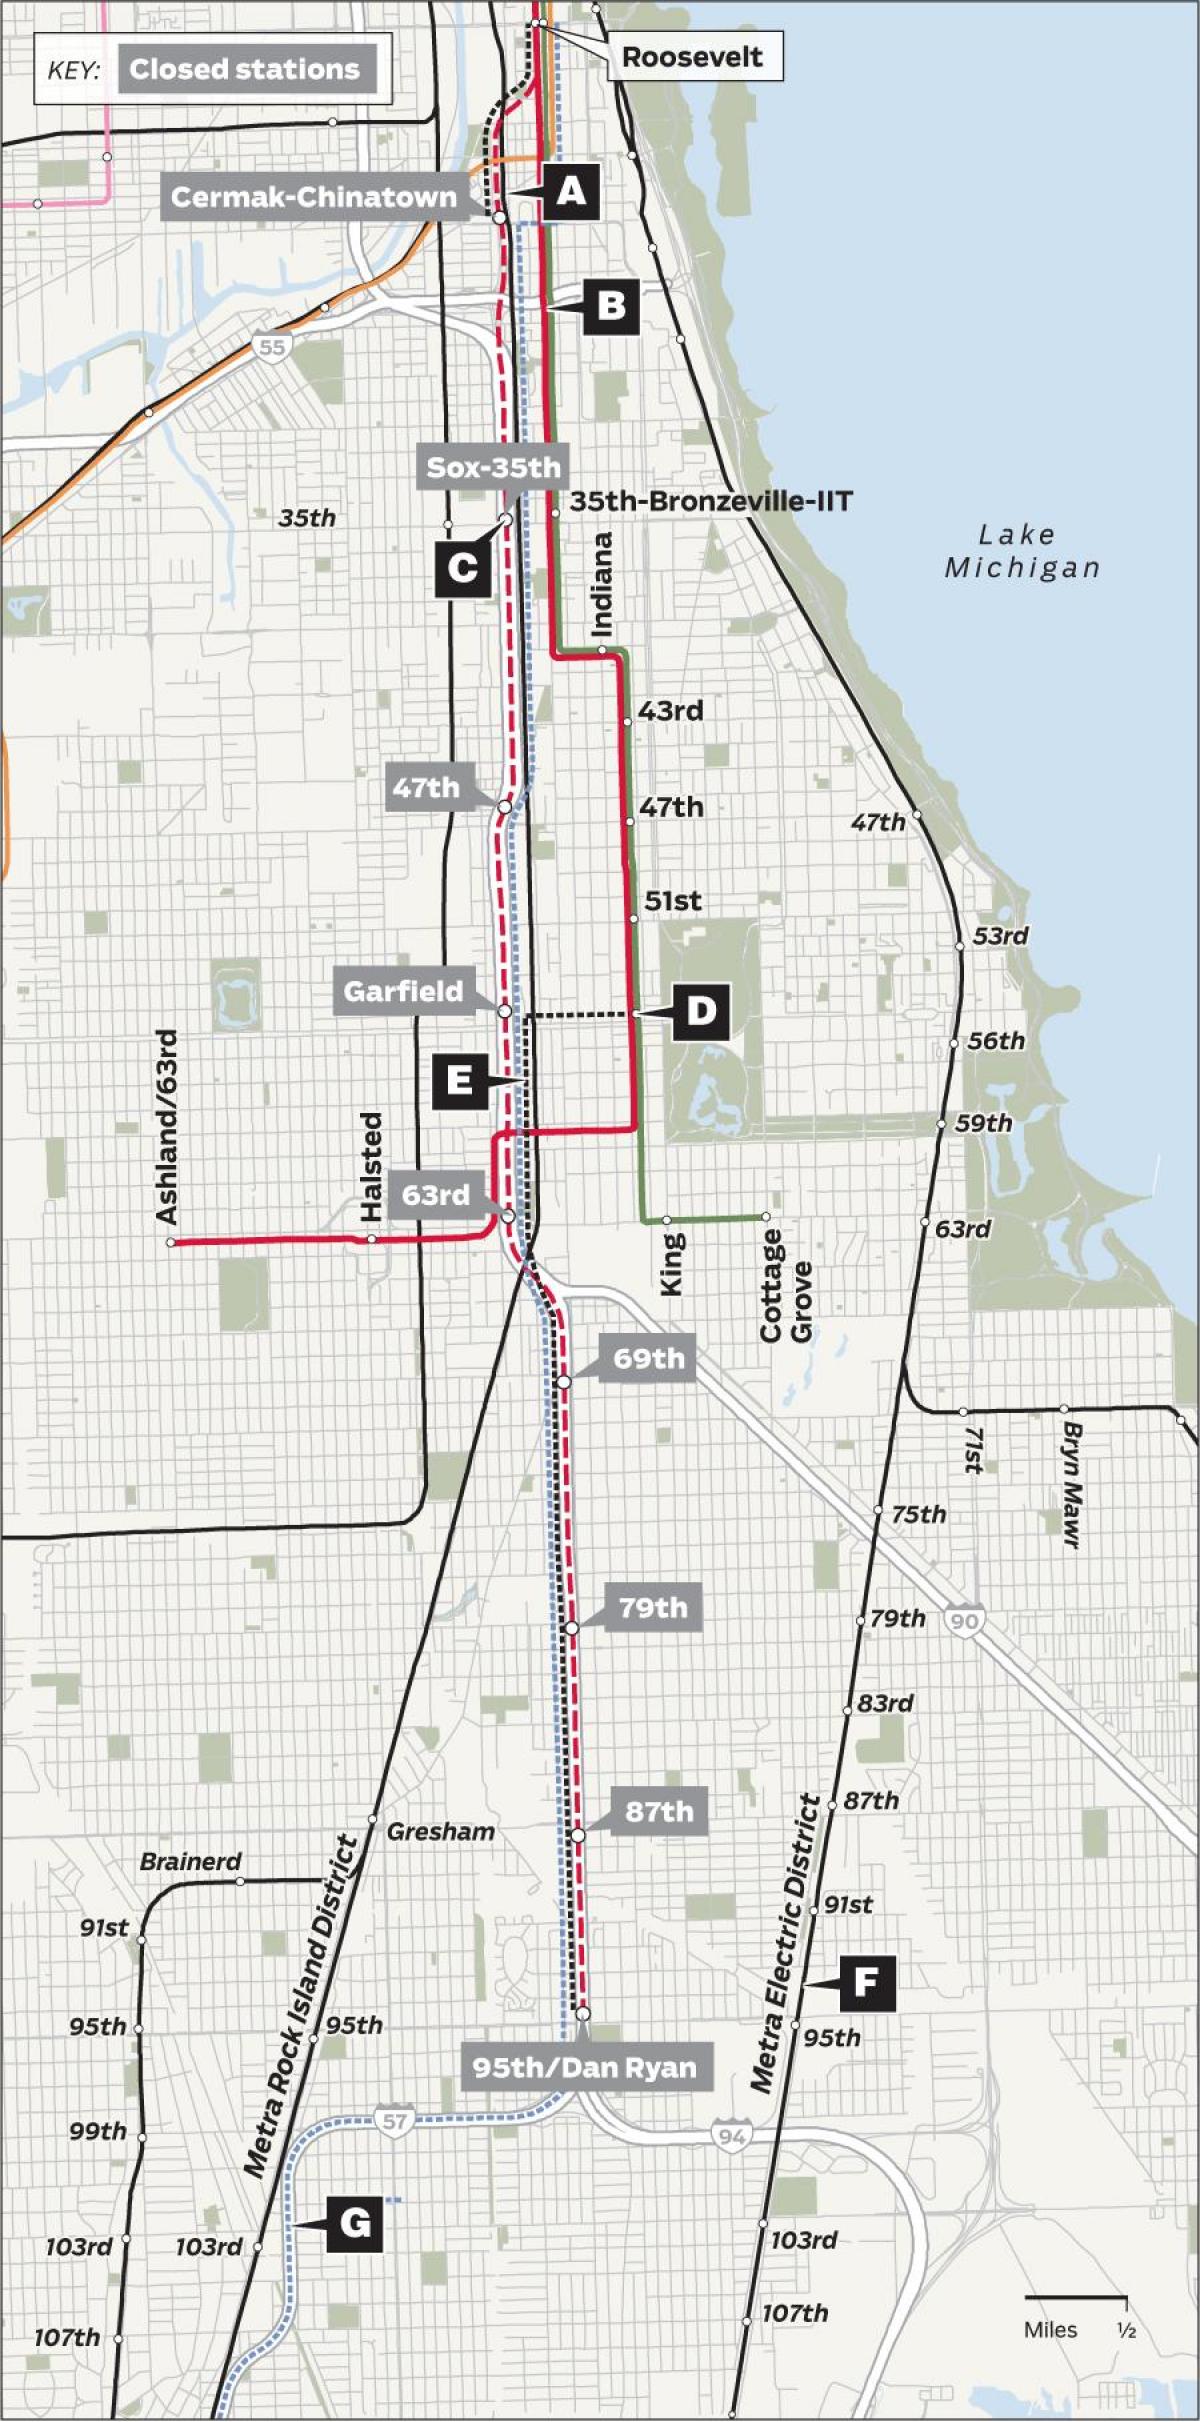 redline Σικάγο εμφάνιση χάρτη